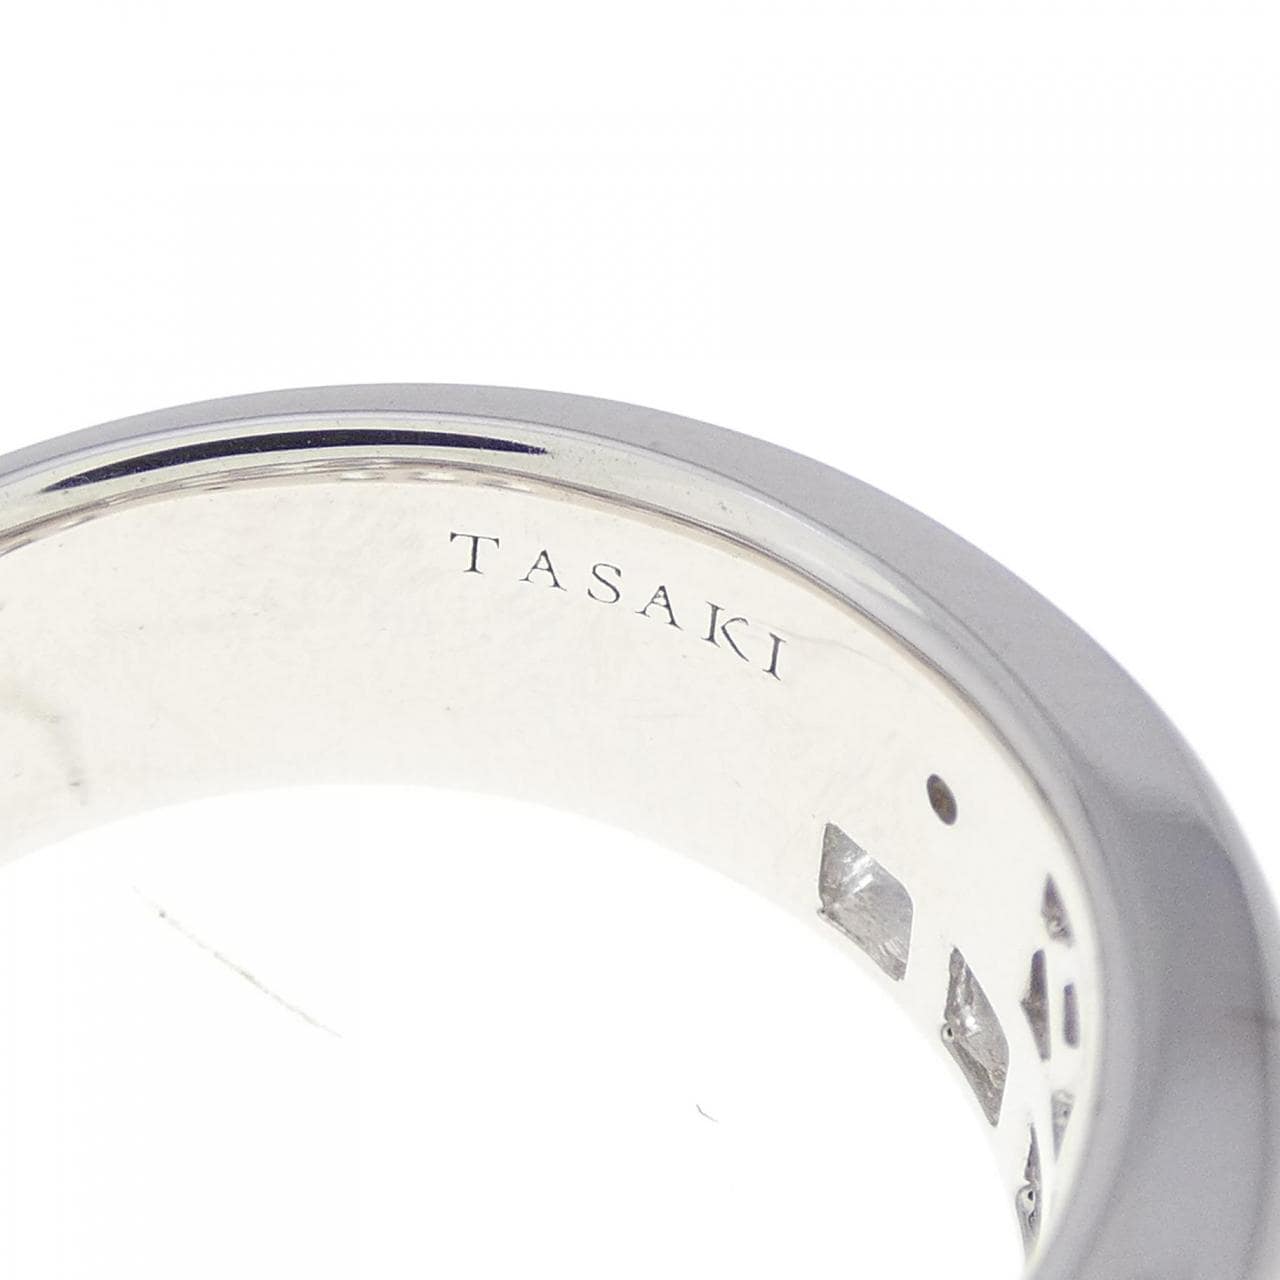 Tasaki mother-of-pearl ring